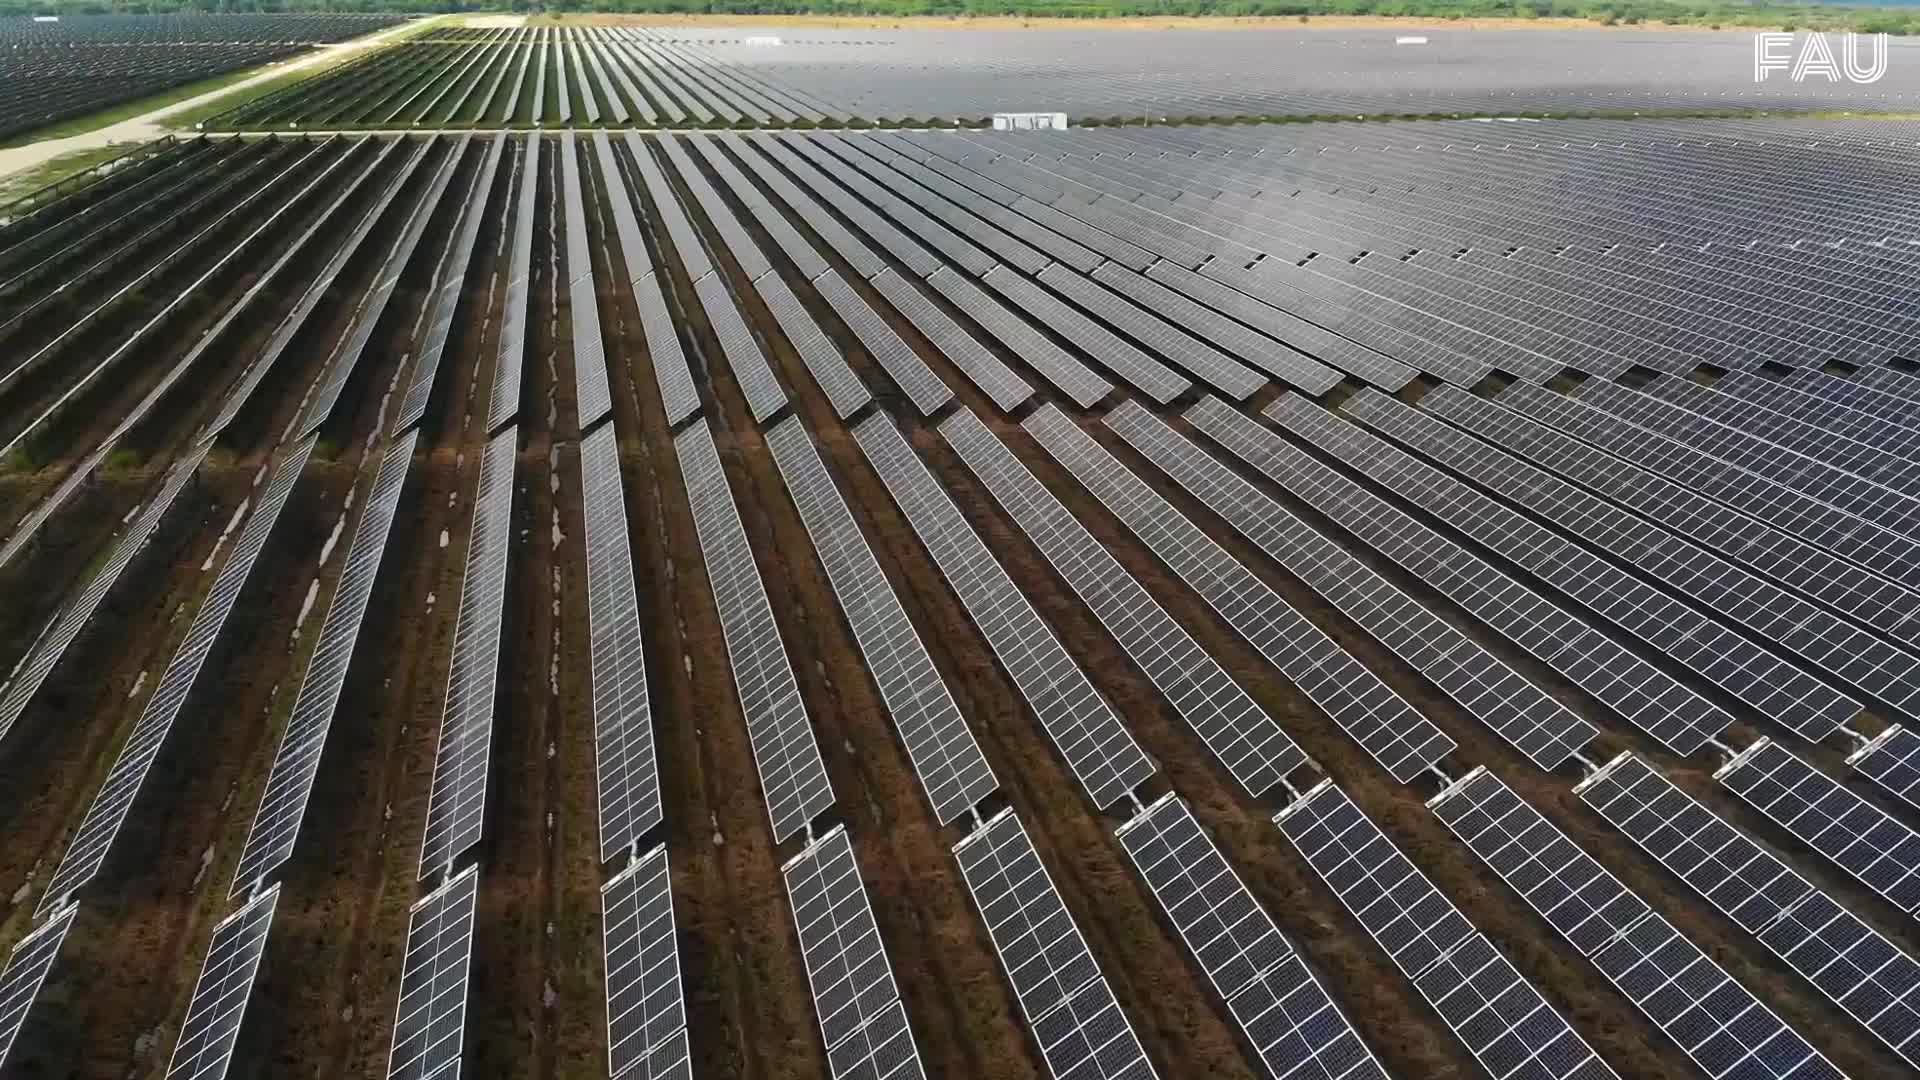 2 Minuten Wissen -  Agri-Photovoltaik preview image